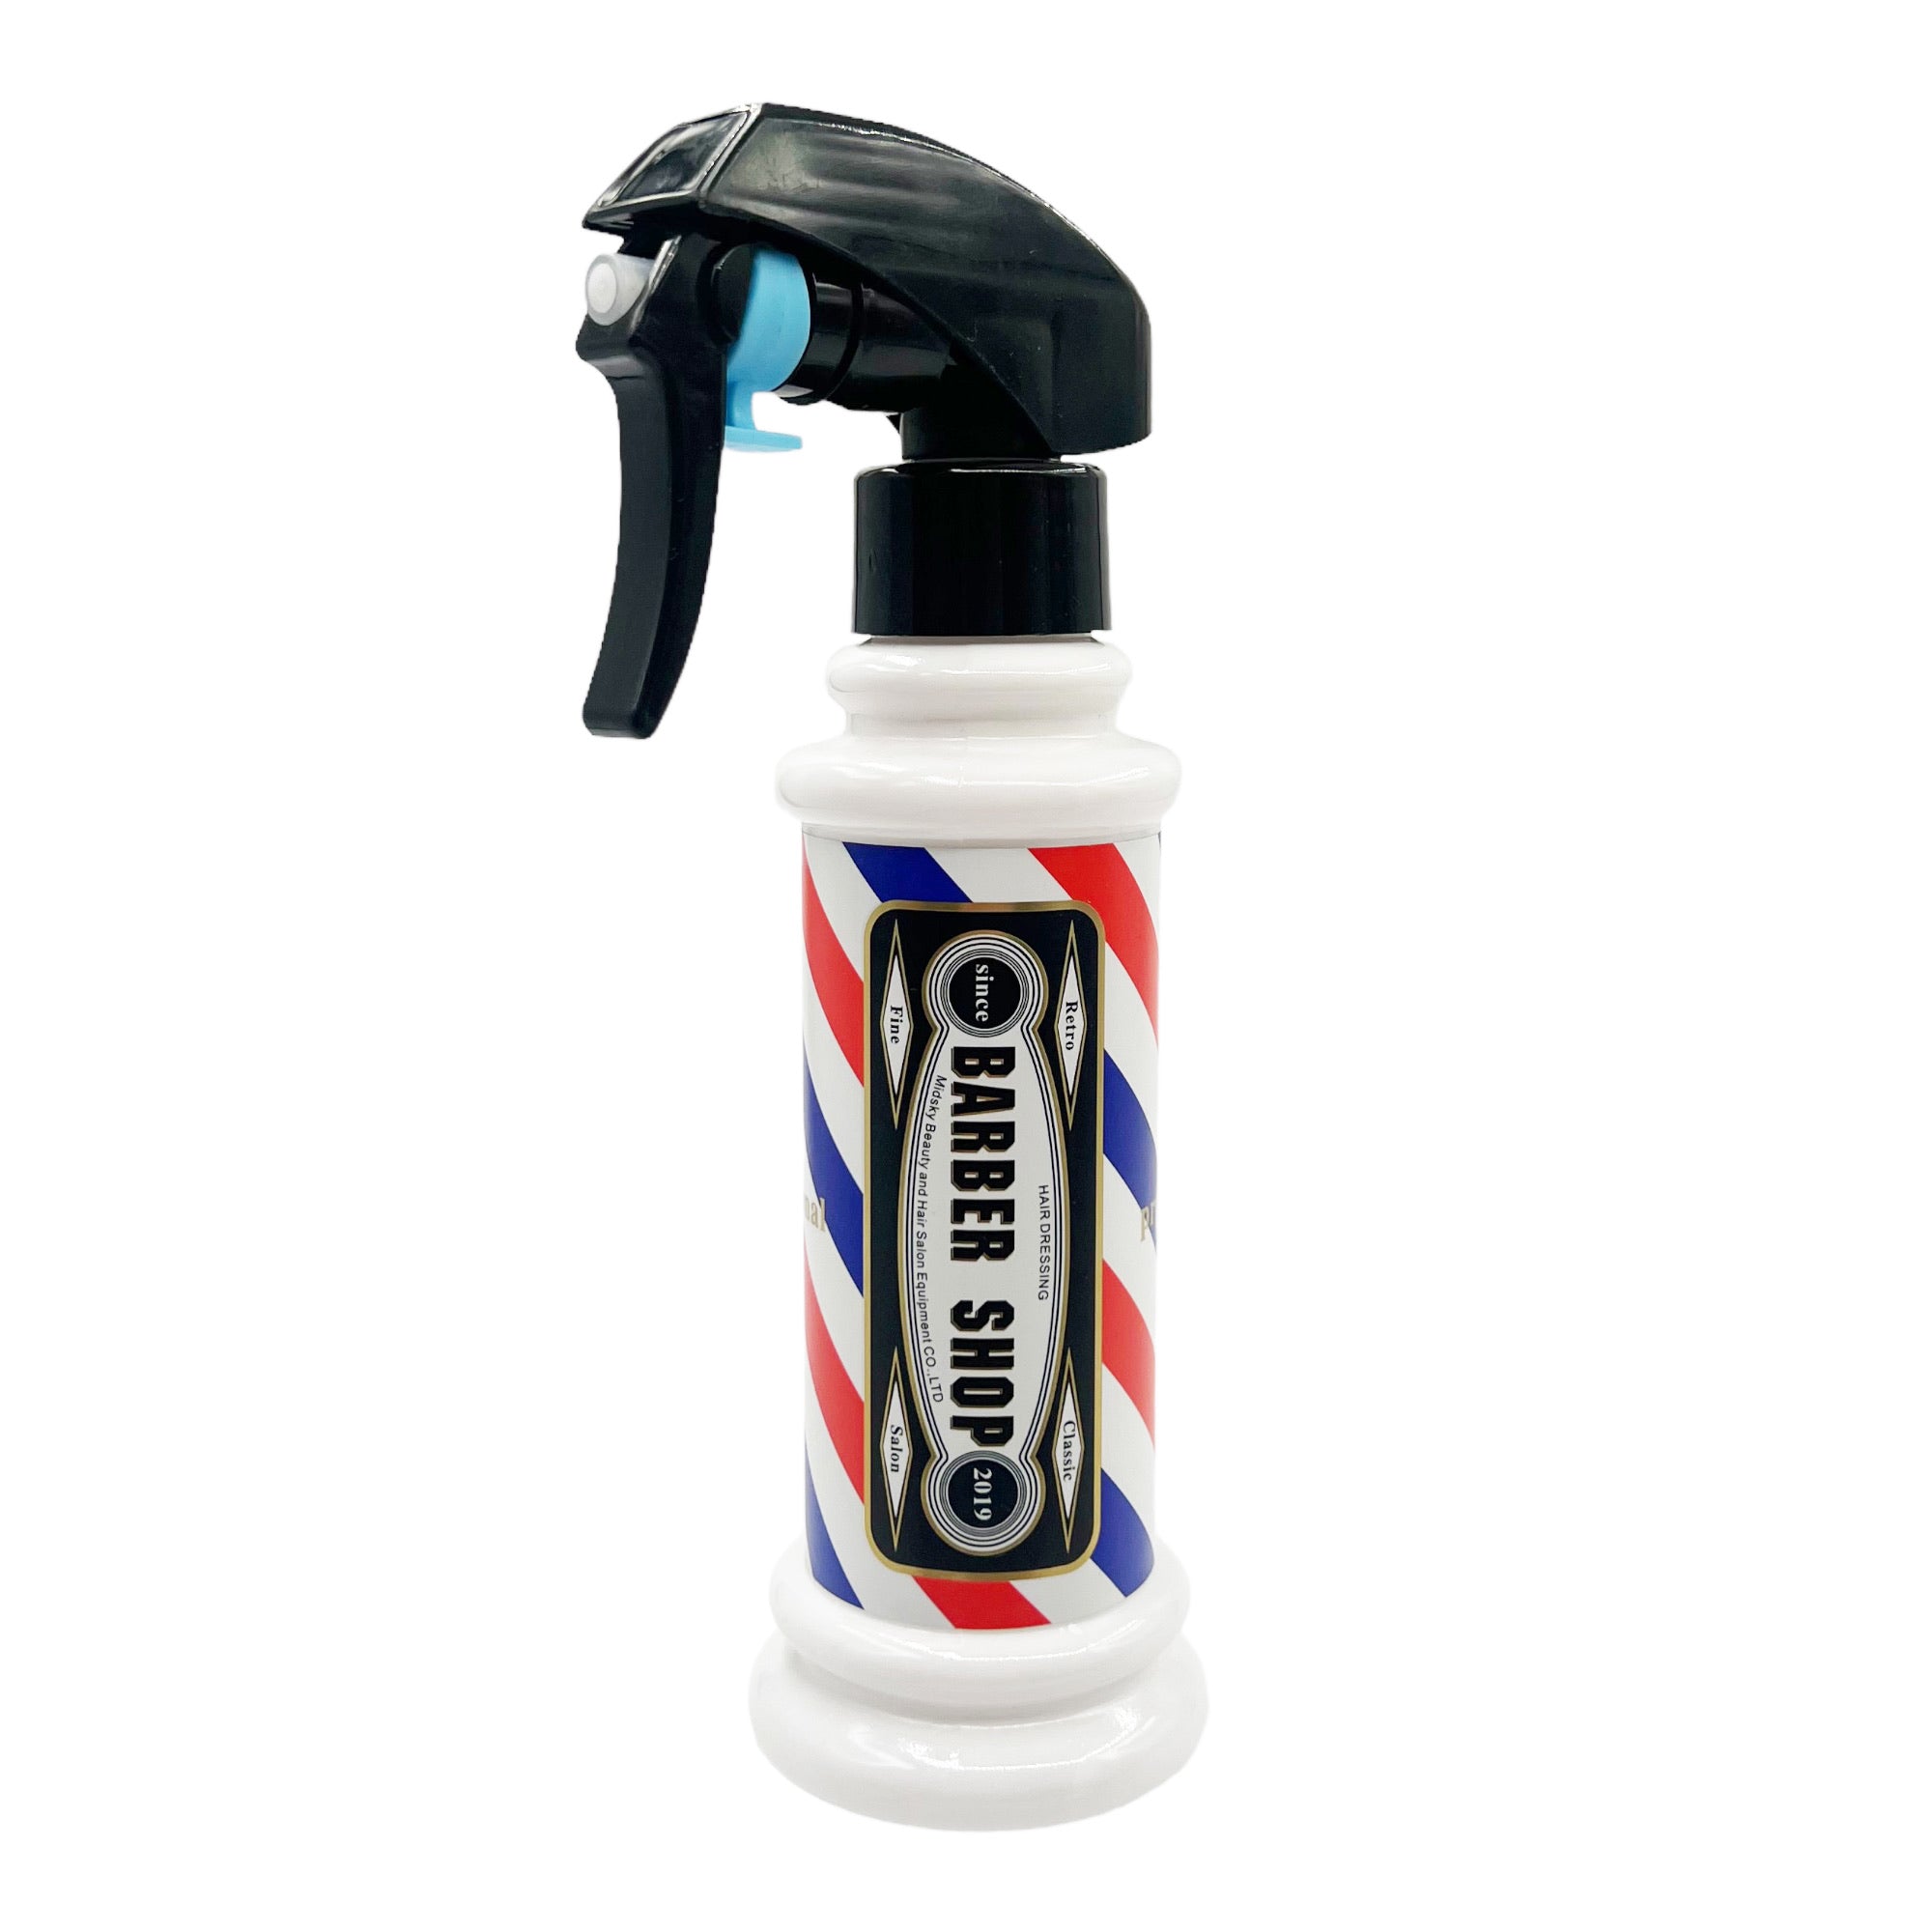 Eson - Water Spray Bottle 150ml Empty Refillable Extreme Mist Spray (White) - Eson Direct